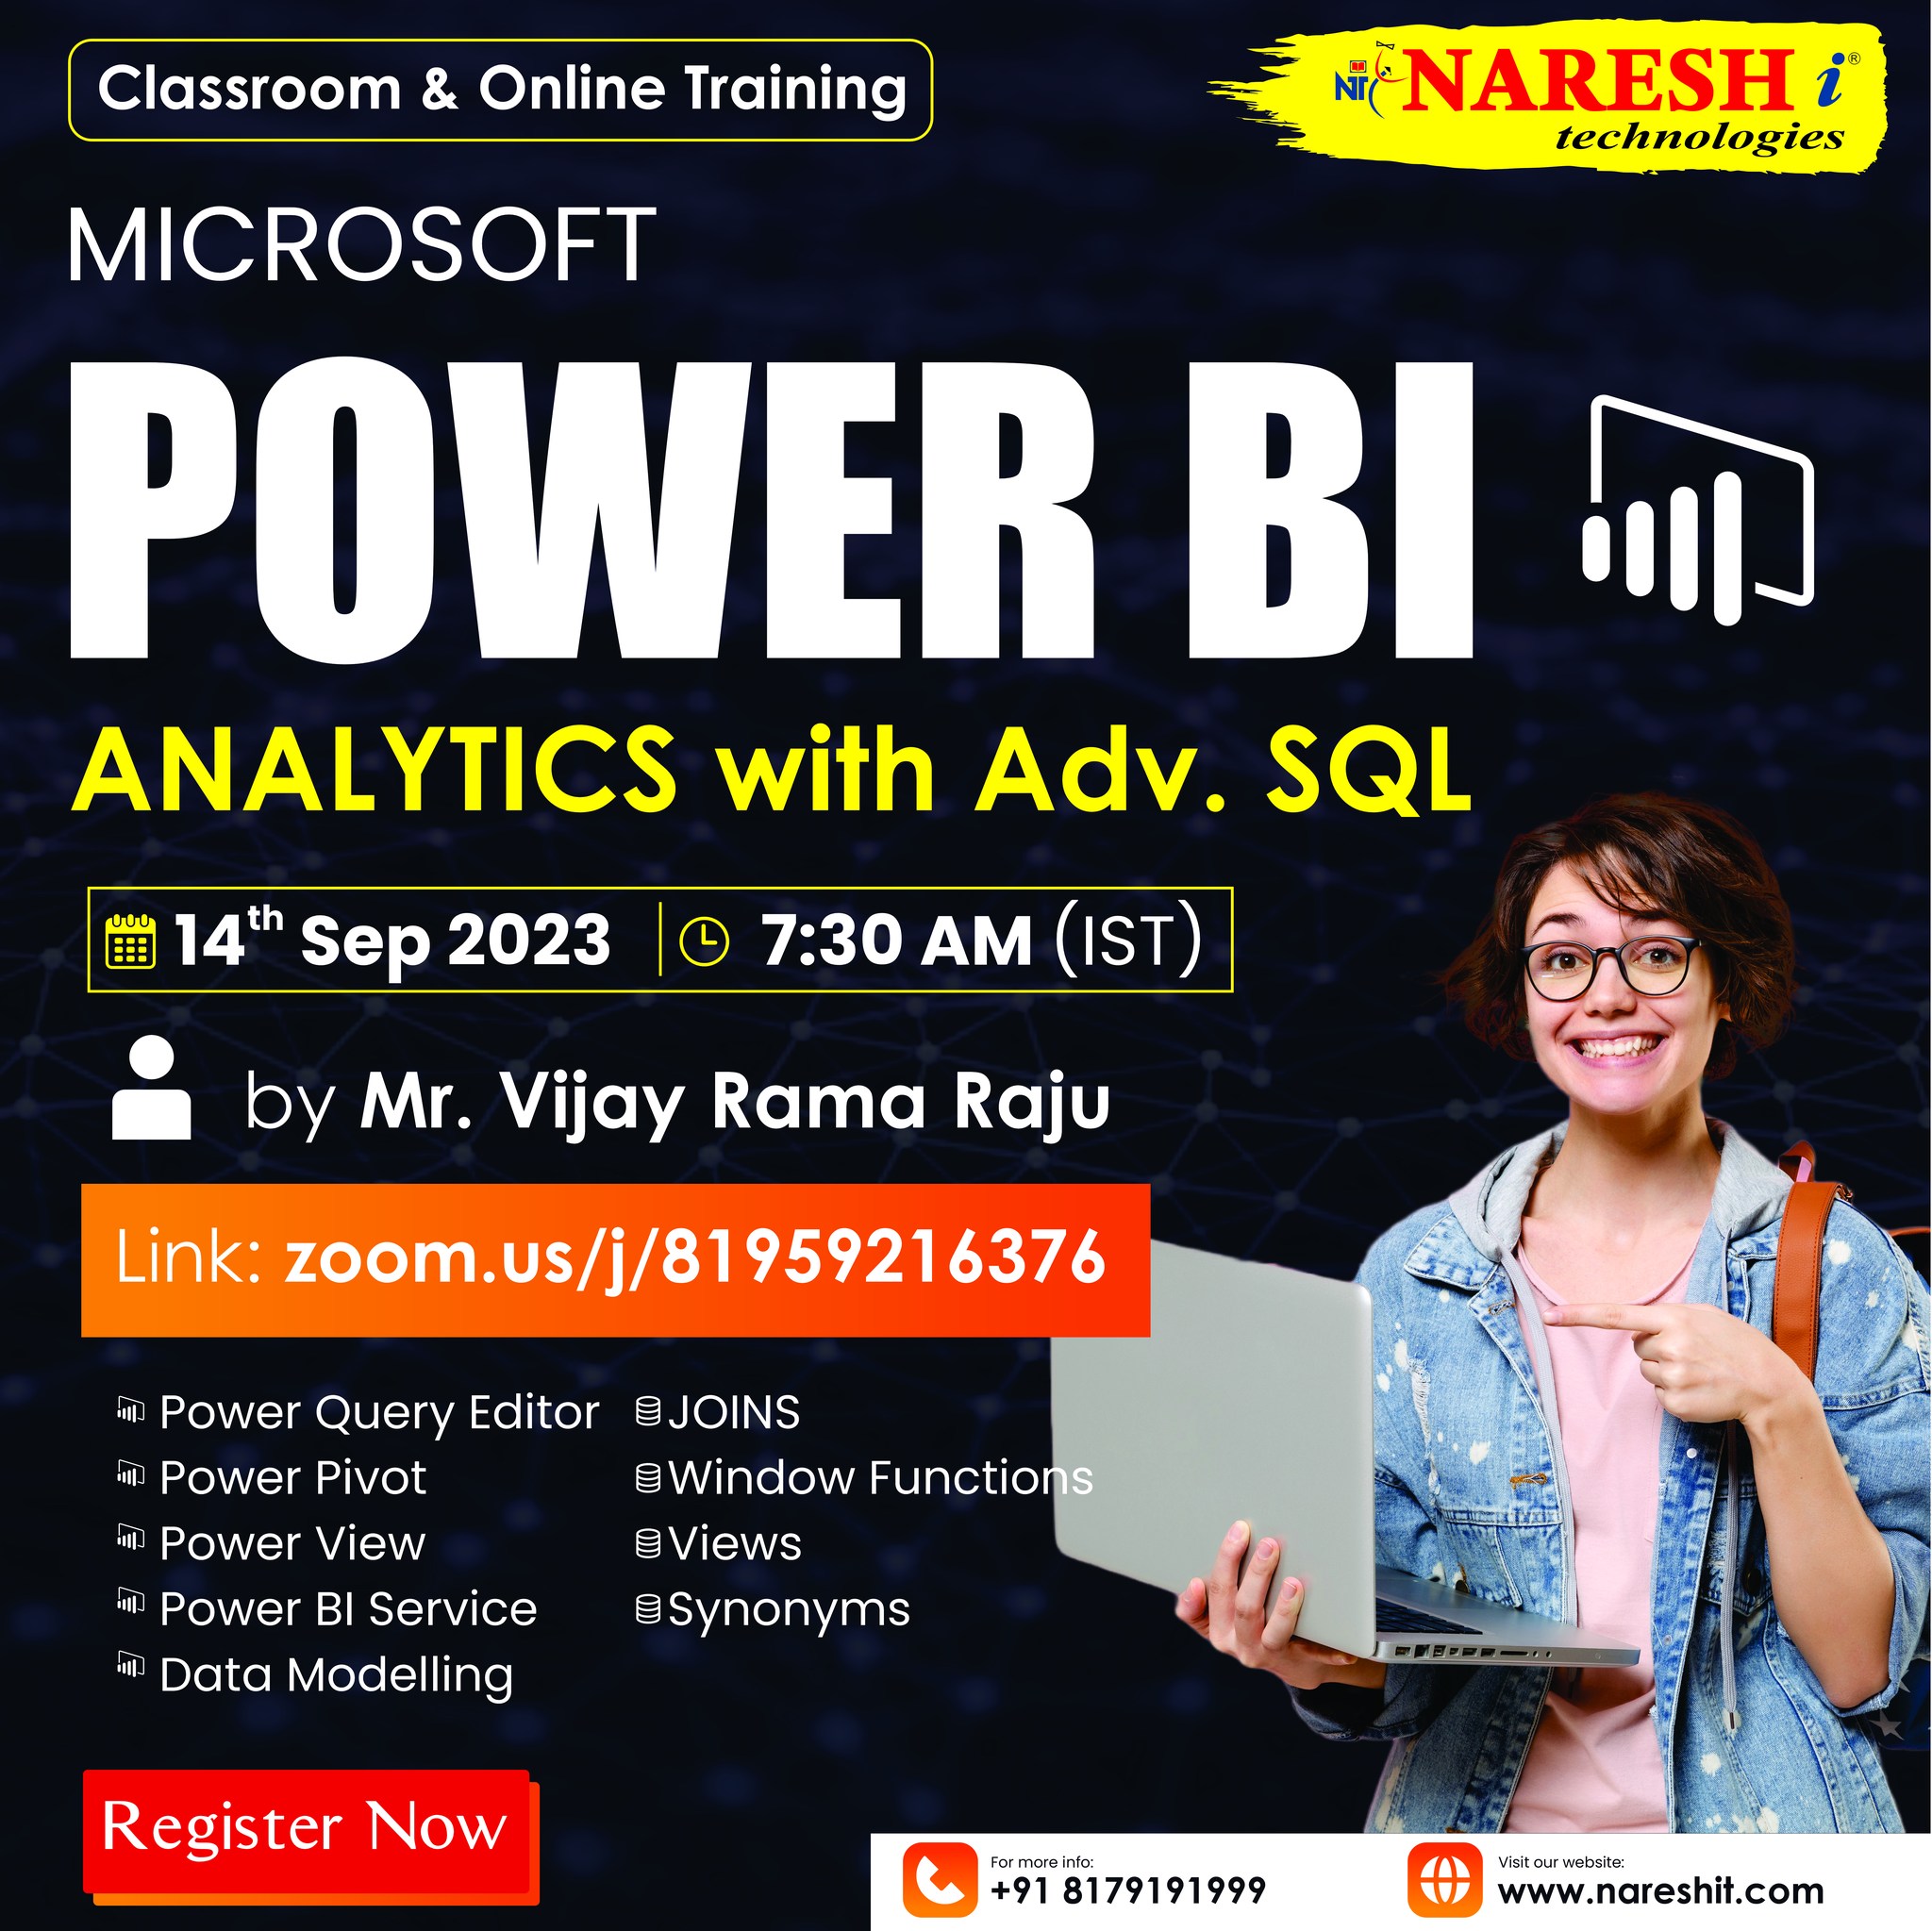 Free Demo On Power BI - Naresh IT, Online Event